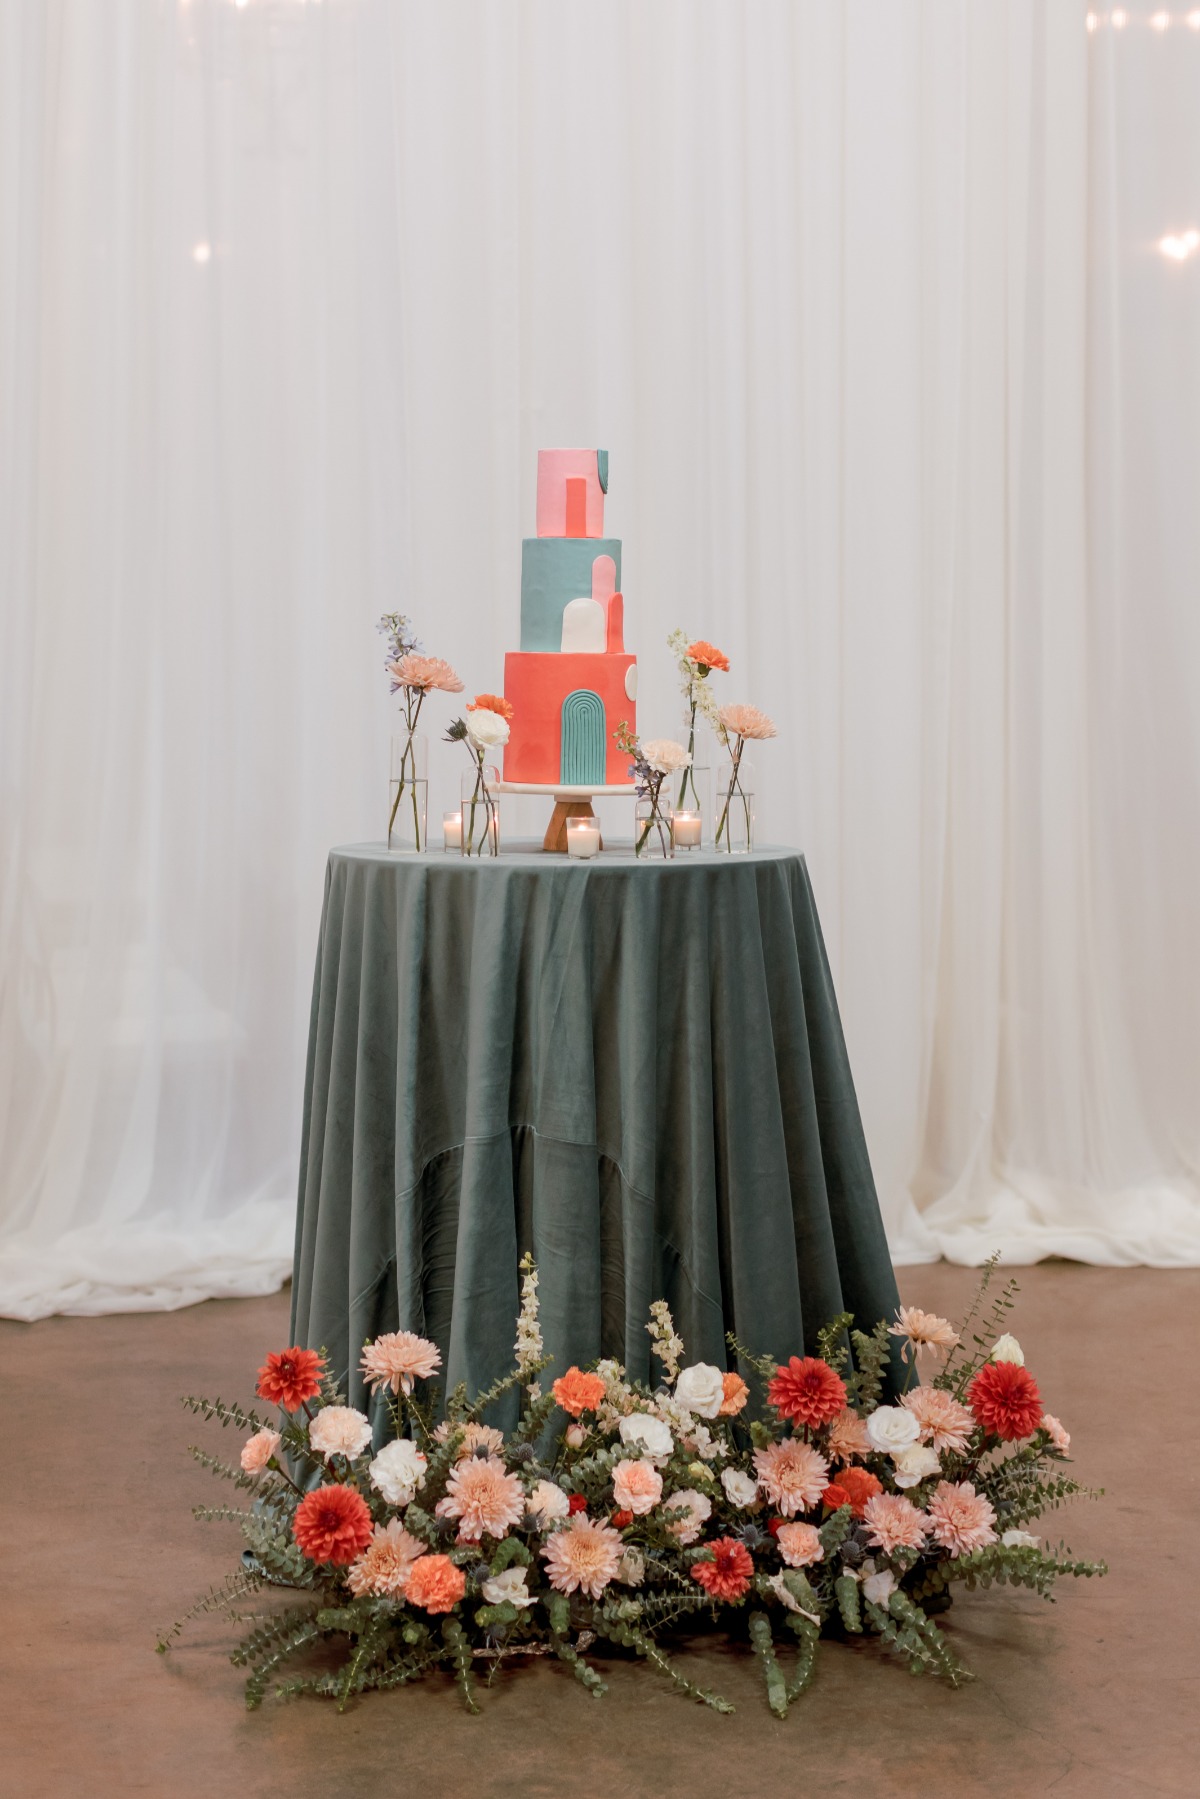 Modern art wedding cake